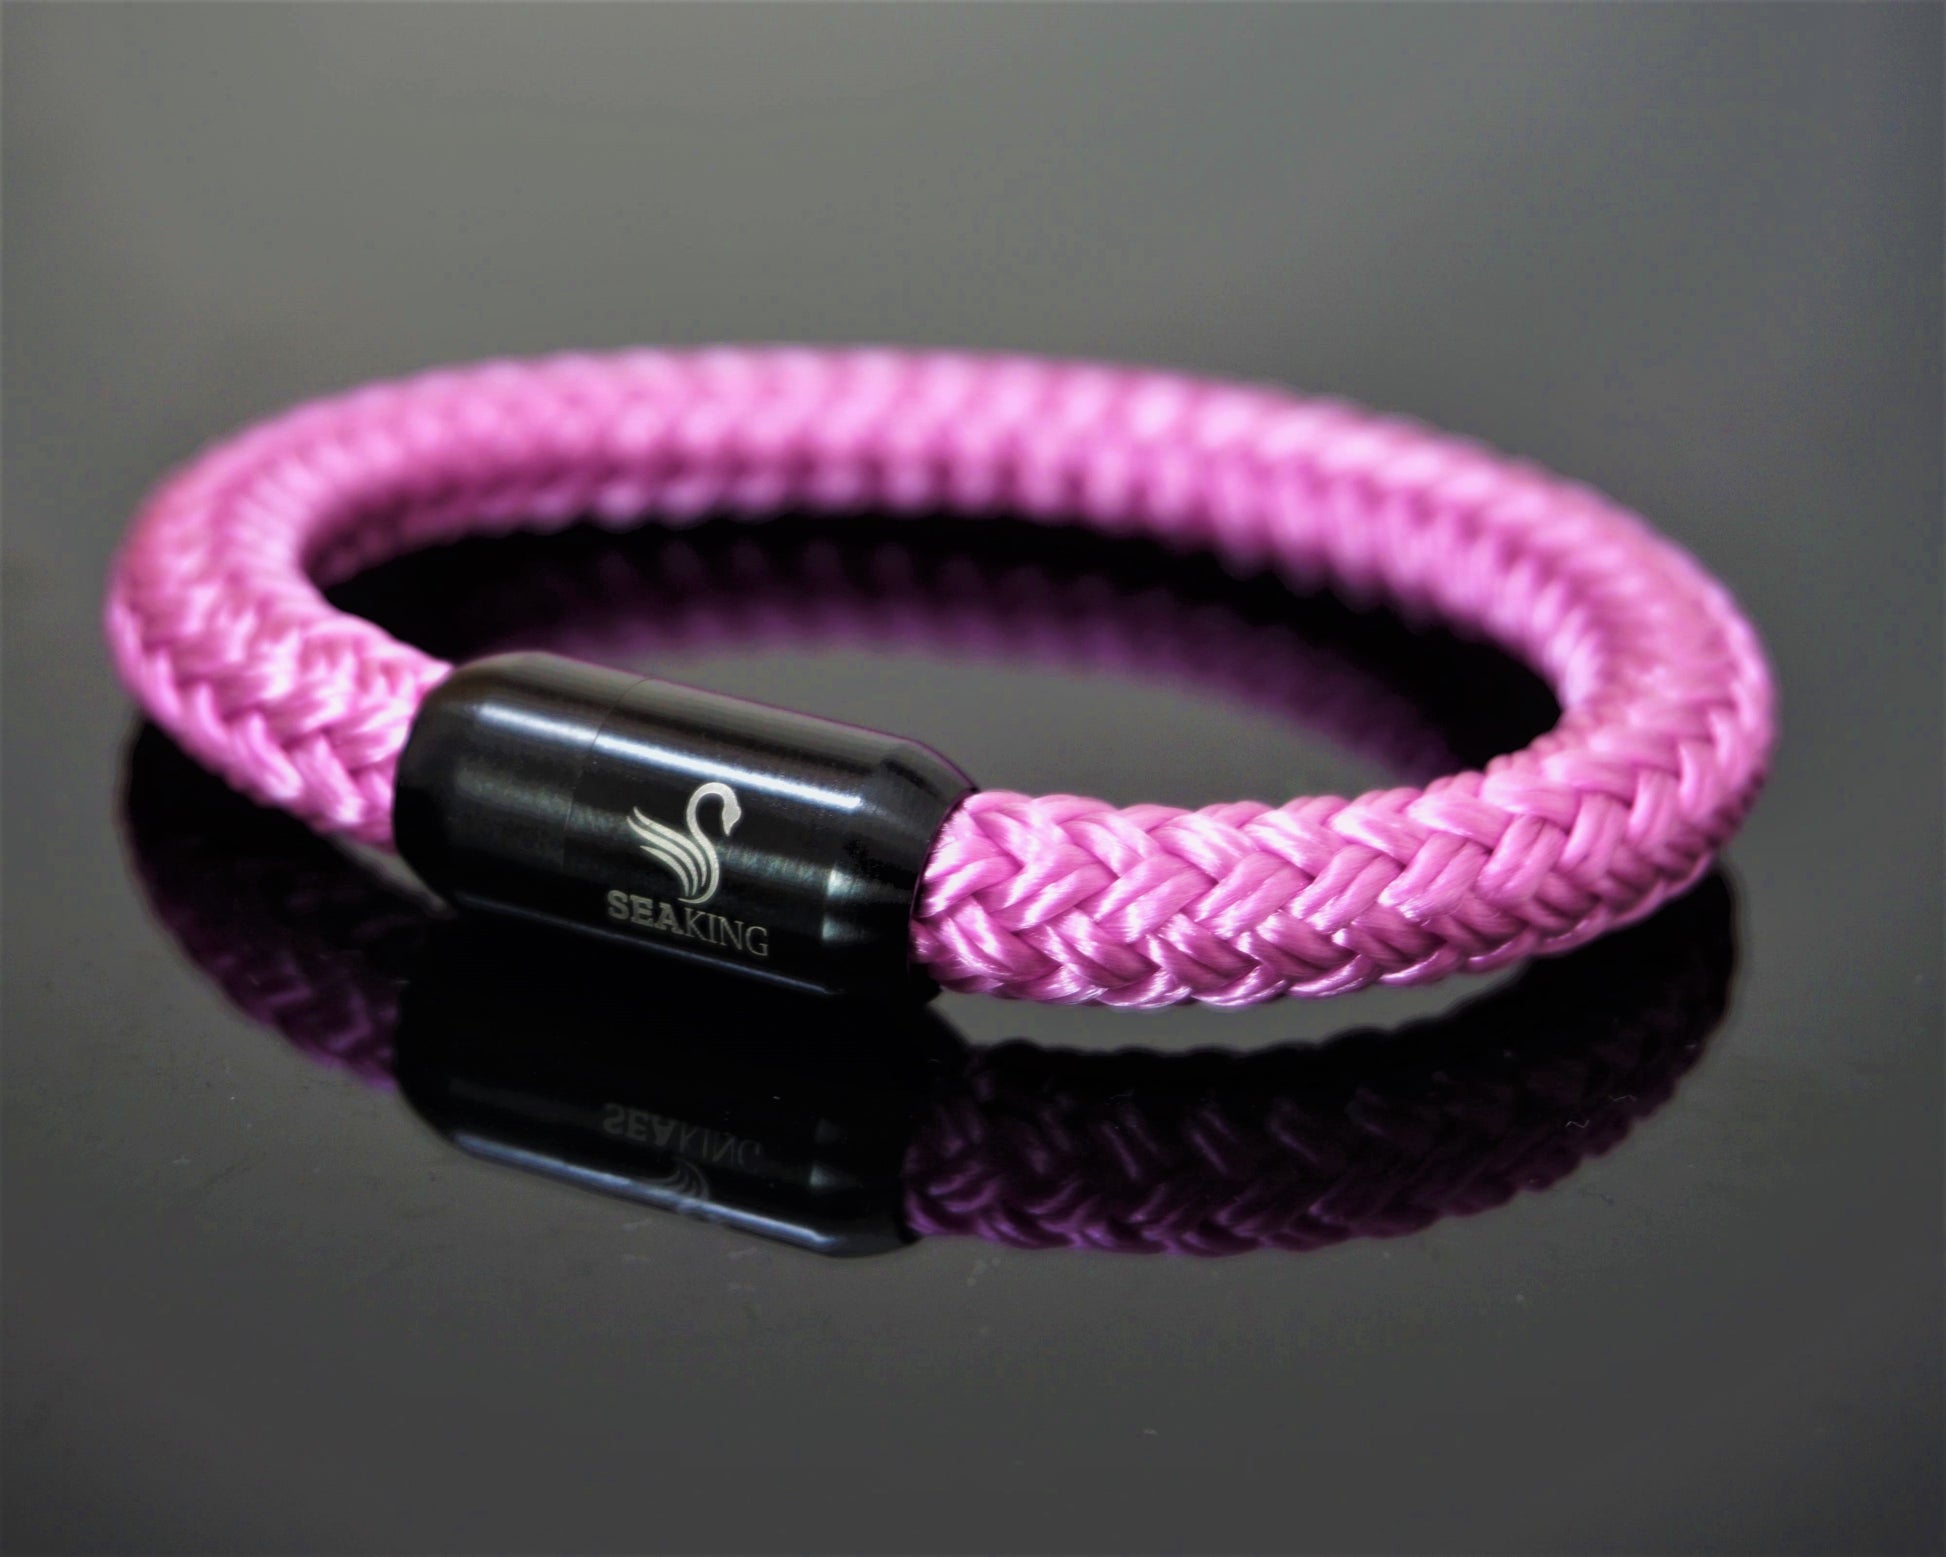 Wörthersee - Basic Farben - Sea King Bracelets